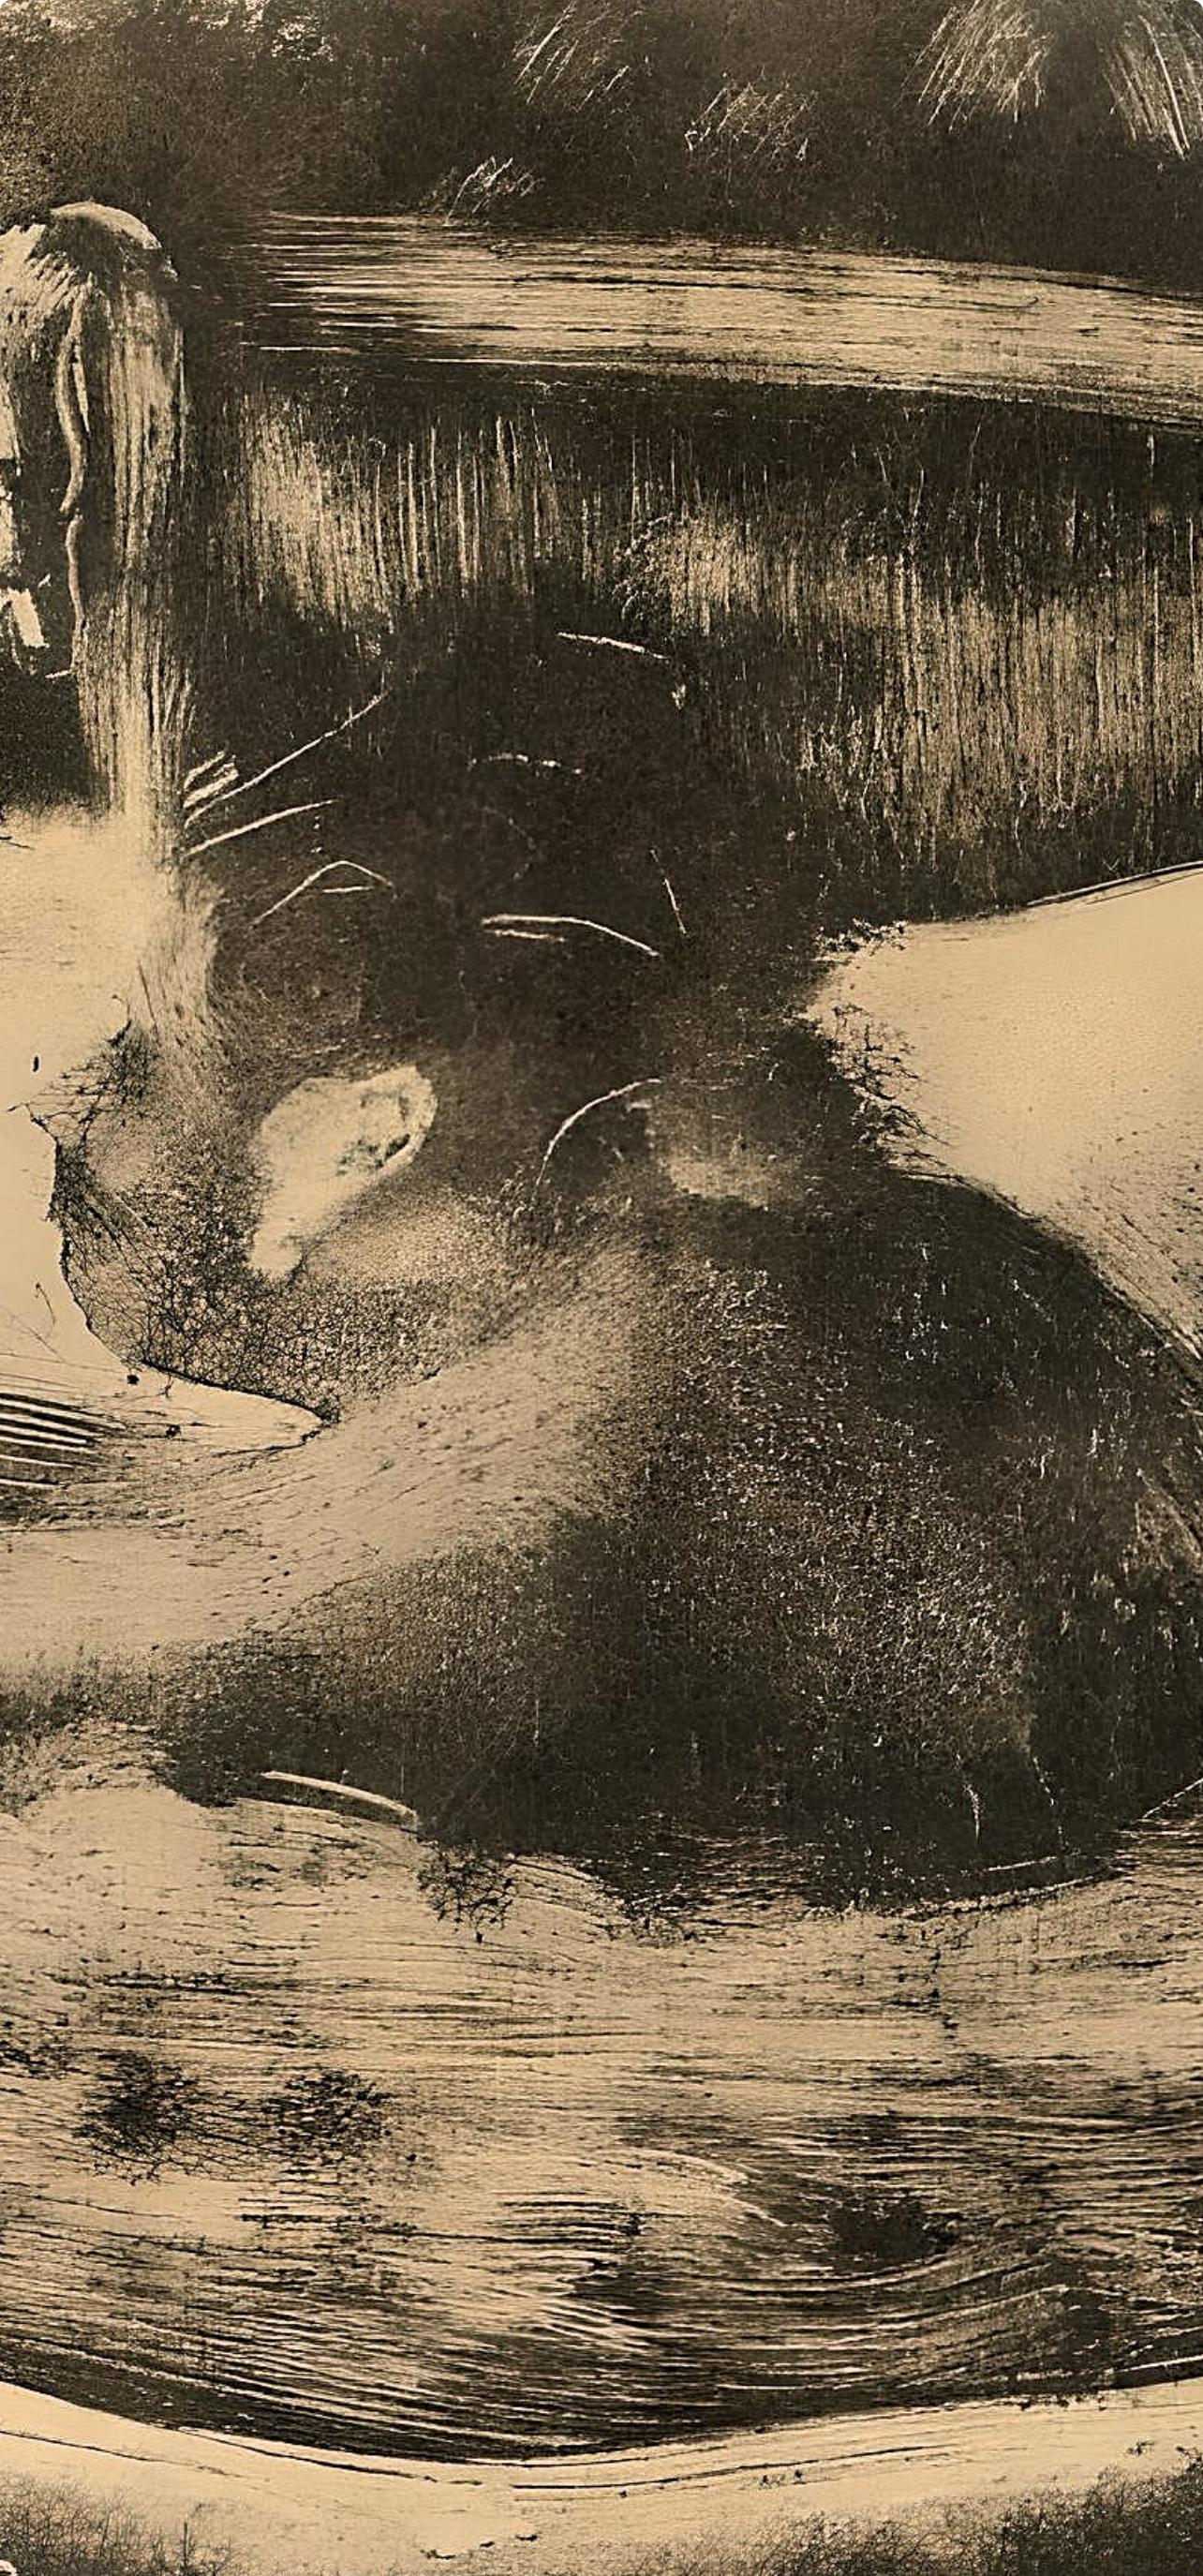 Degas, Le Bain, Les Monotypes (after) - Print by Edgar Degas